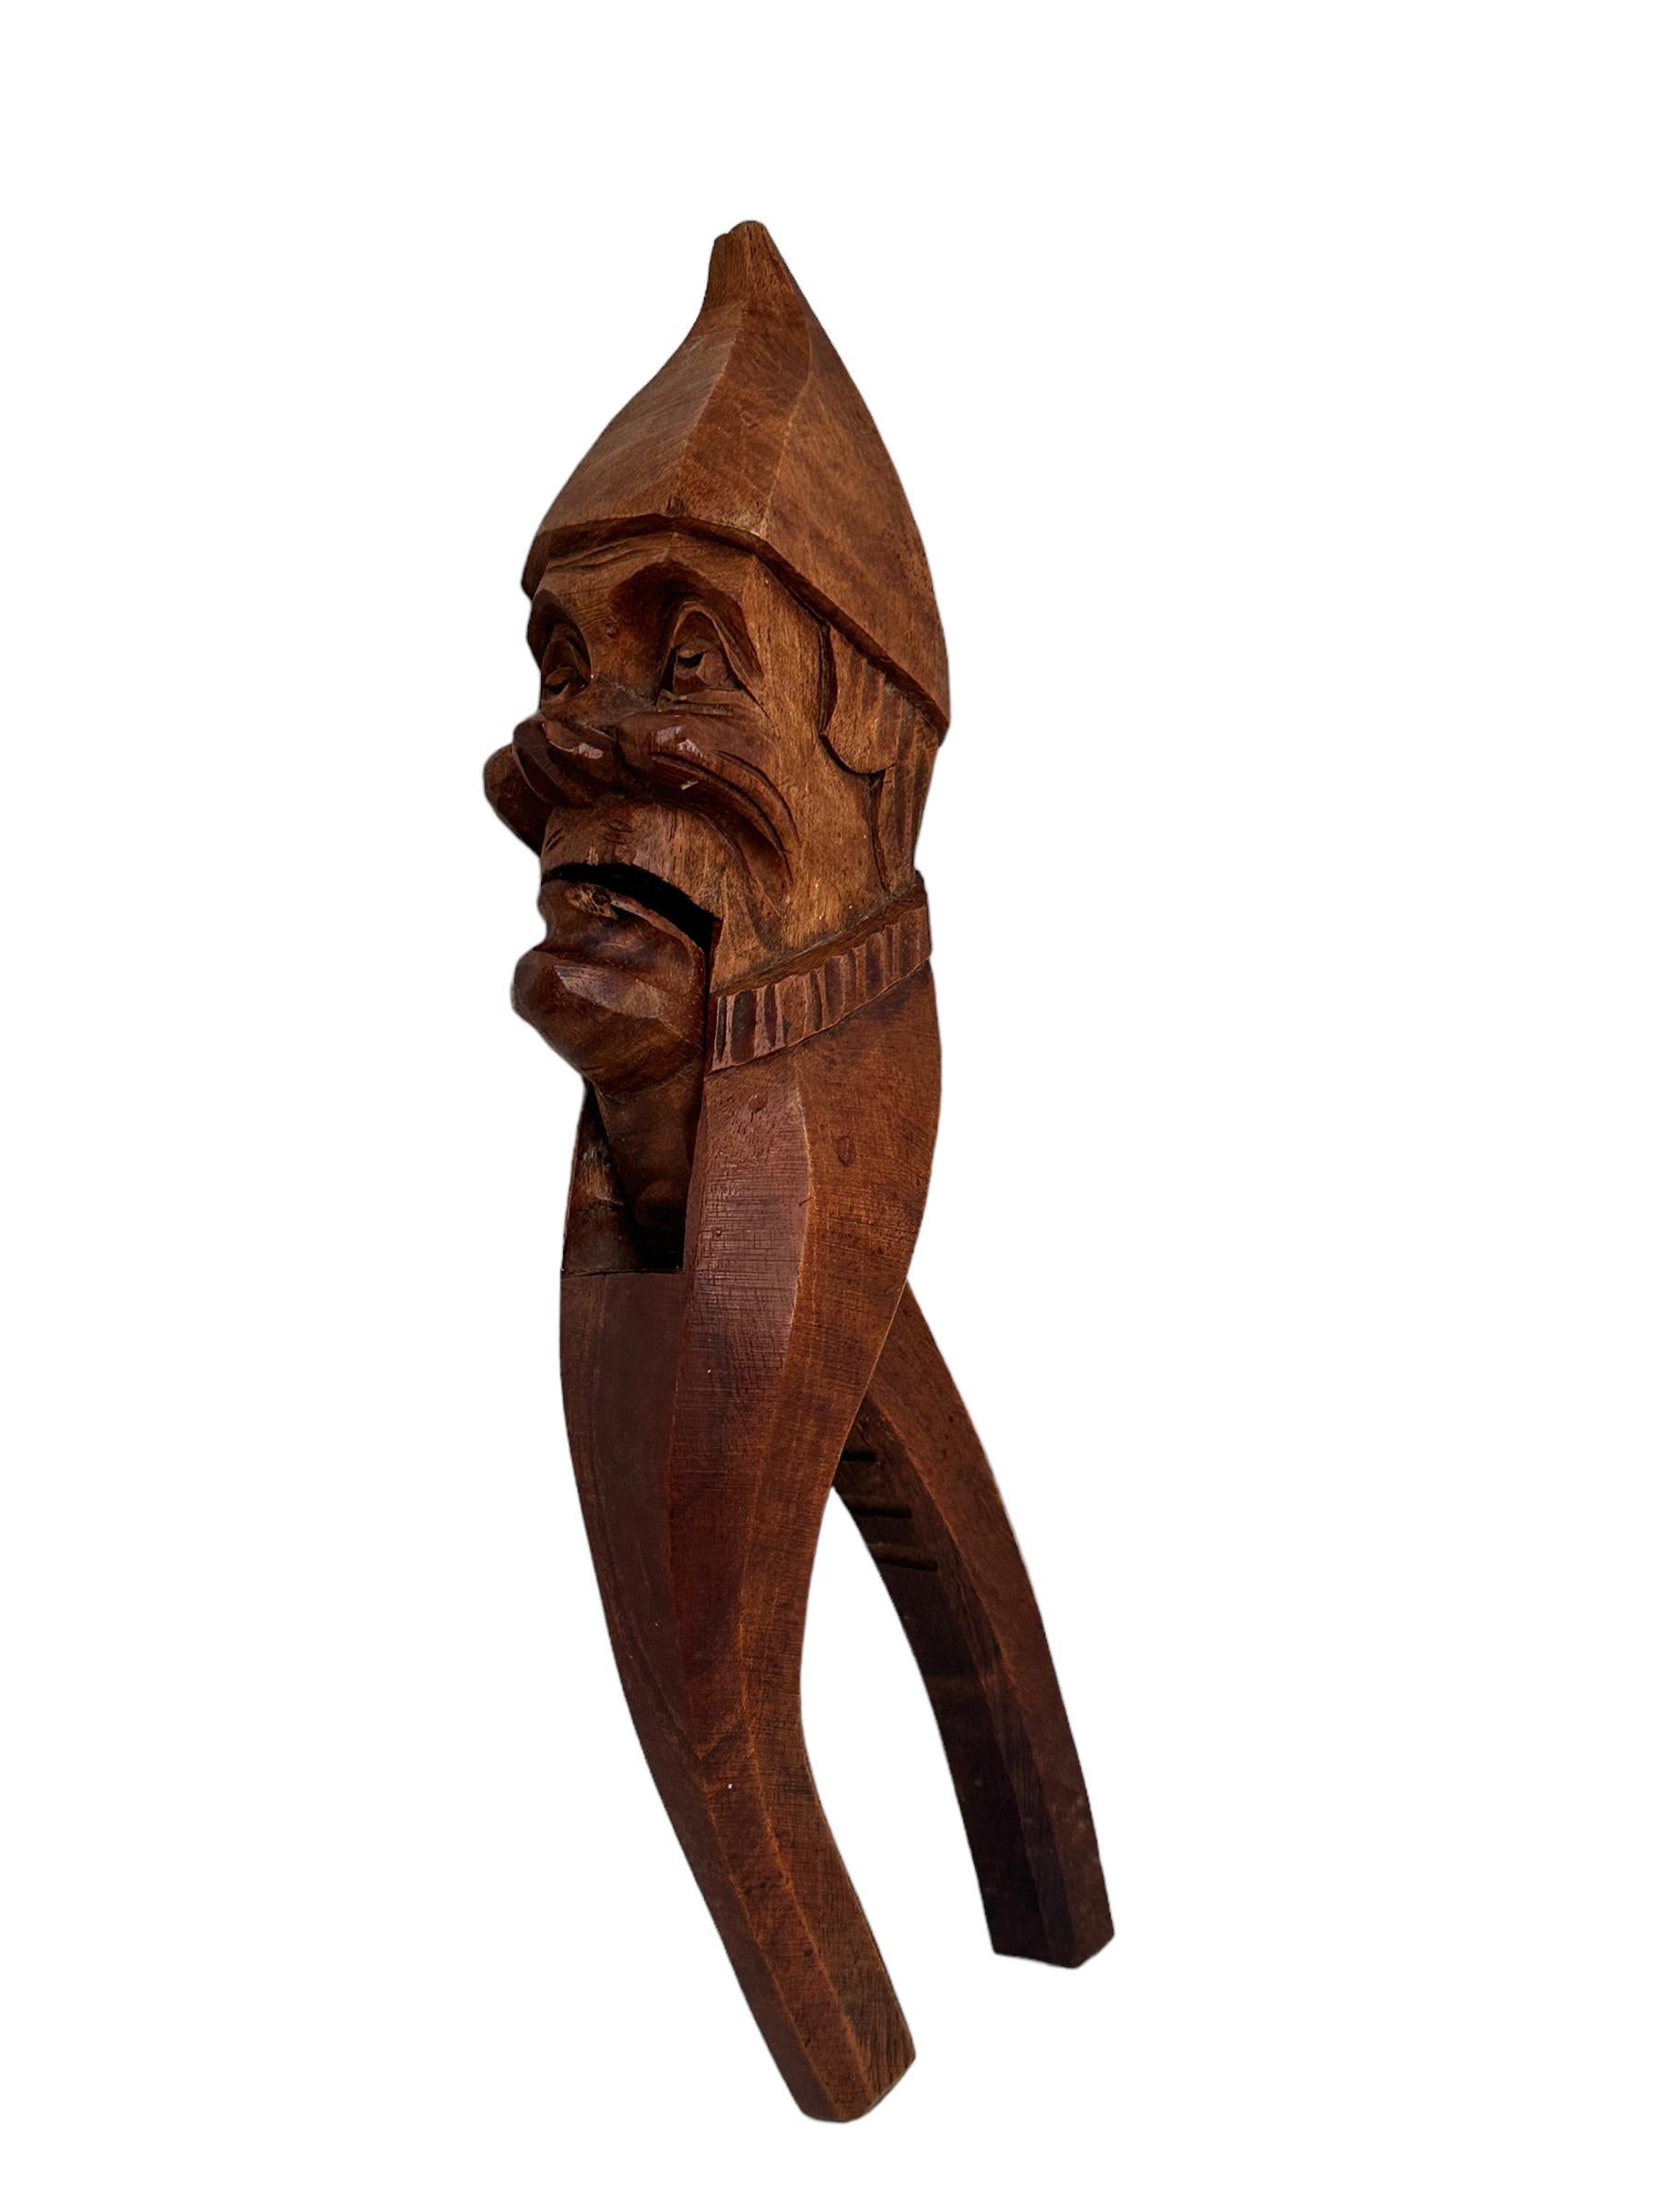 Hand-Carved Wood Black Forest Brienz Carved Figural Gnome Nutcracker German Antique, 1930s For Sale